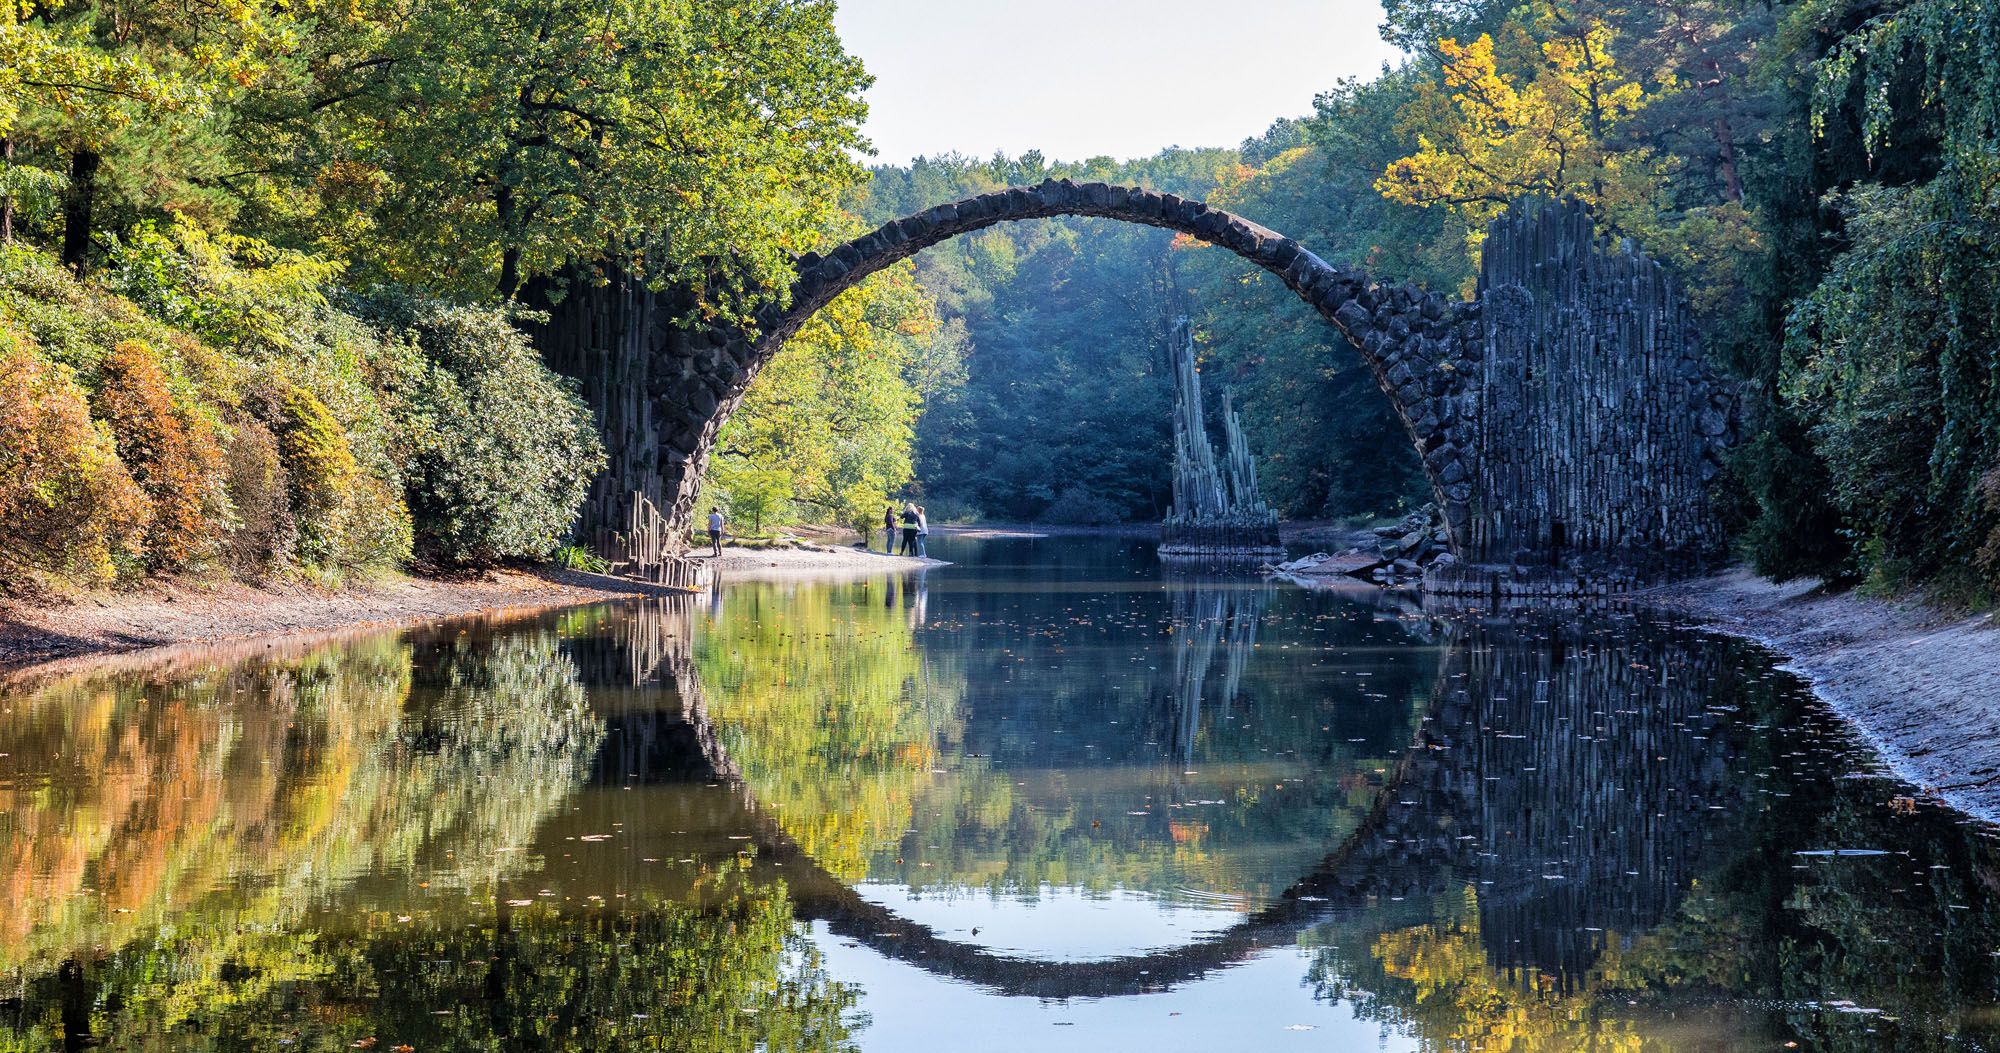 Featured image for “Rakotzbrücke: A Fairytale Bridge in Saxony, Germany”